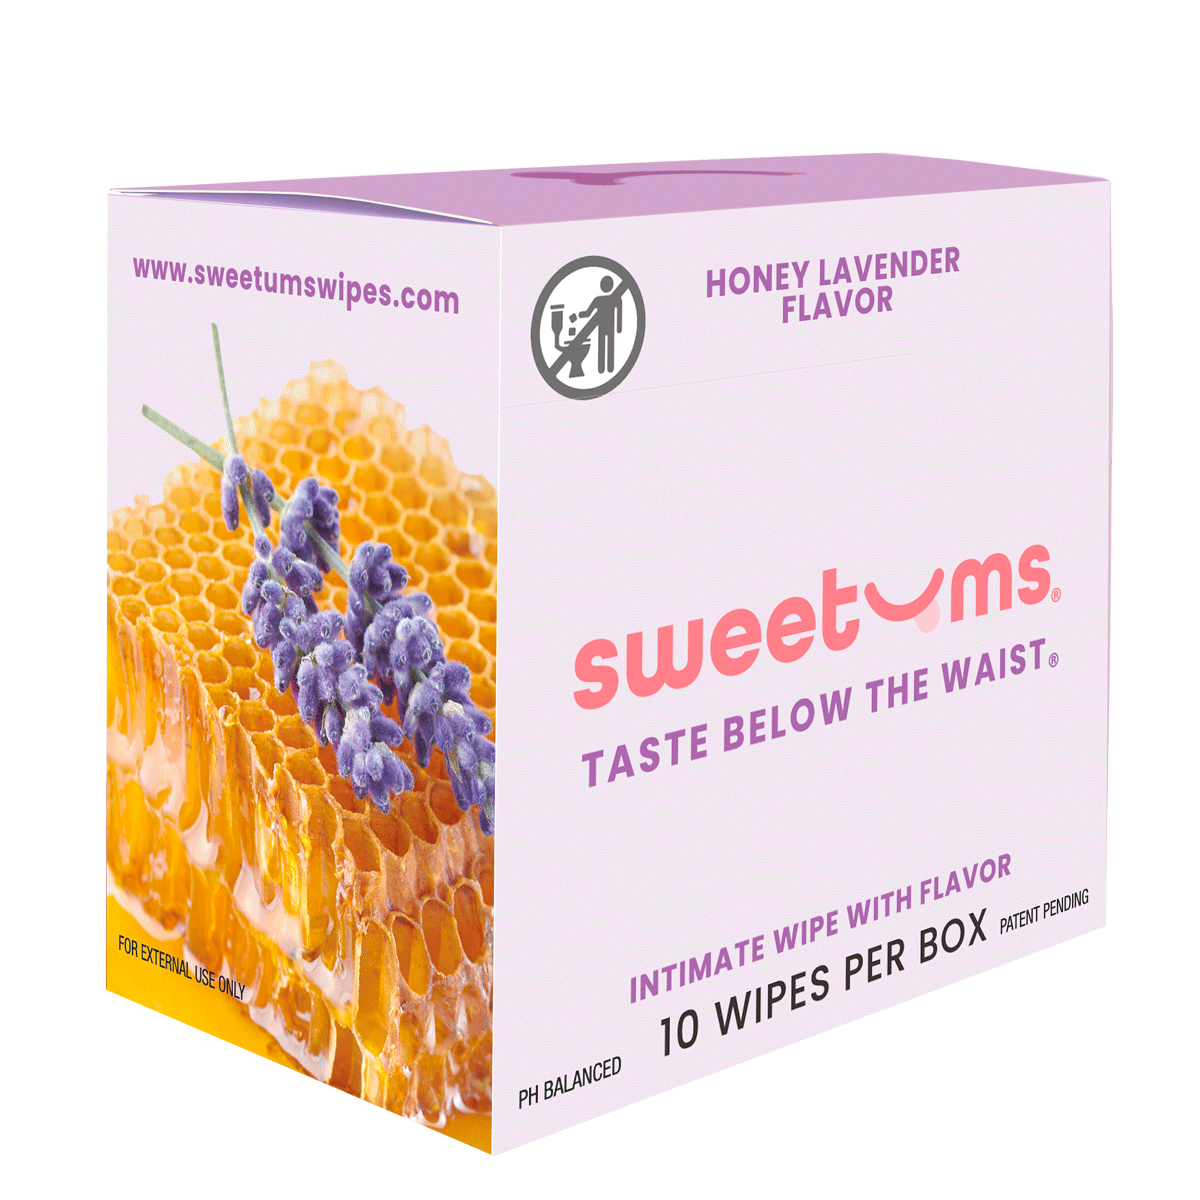 Sweetums Feminine intimate wipes - Honey Lavender